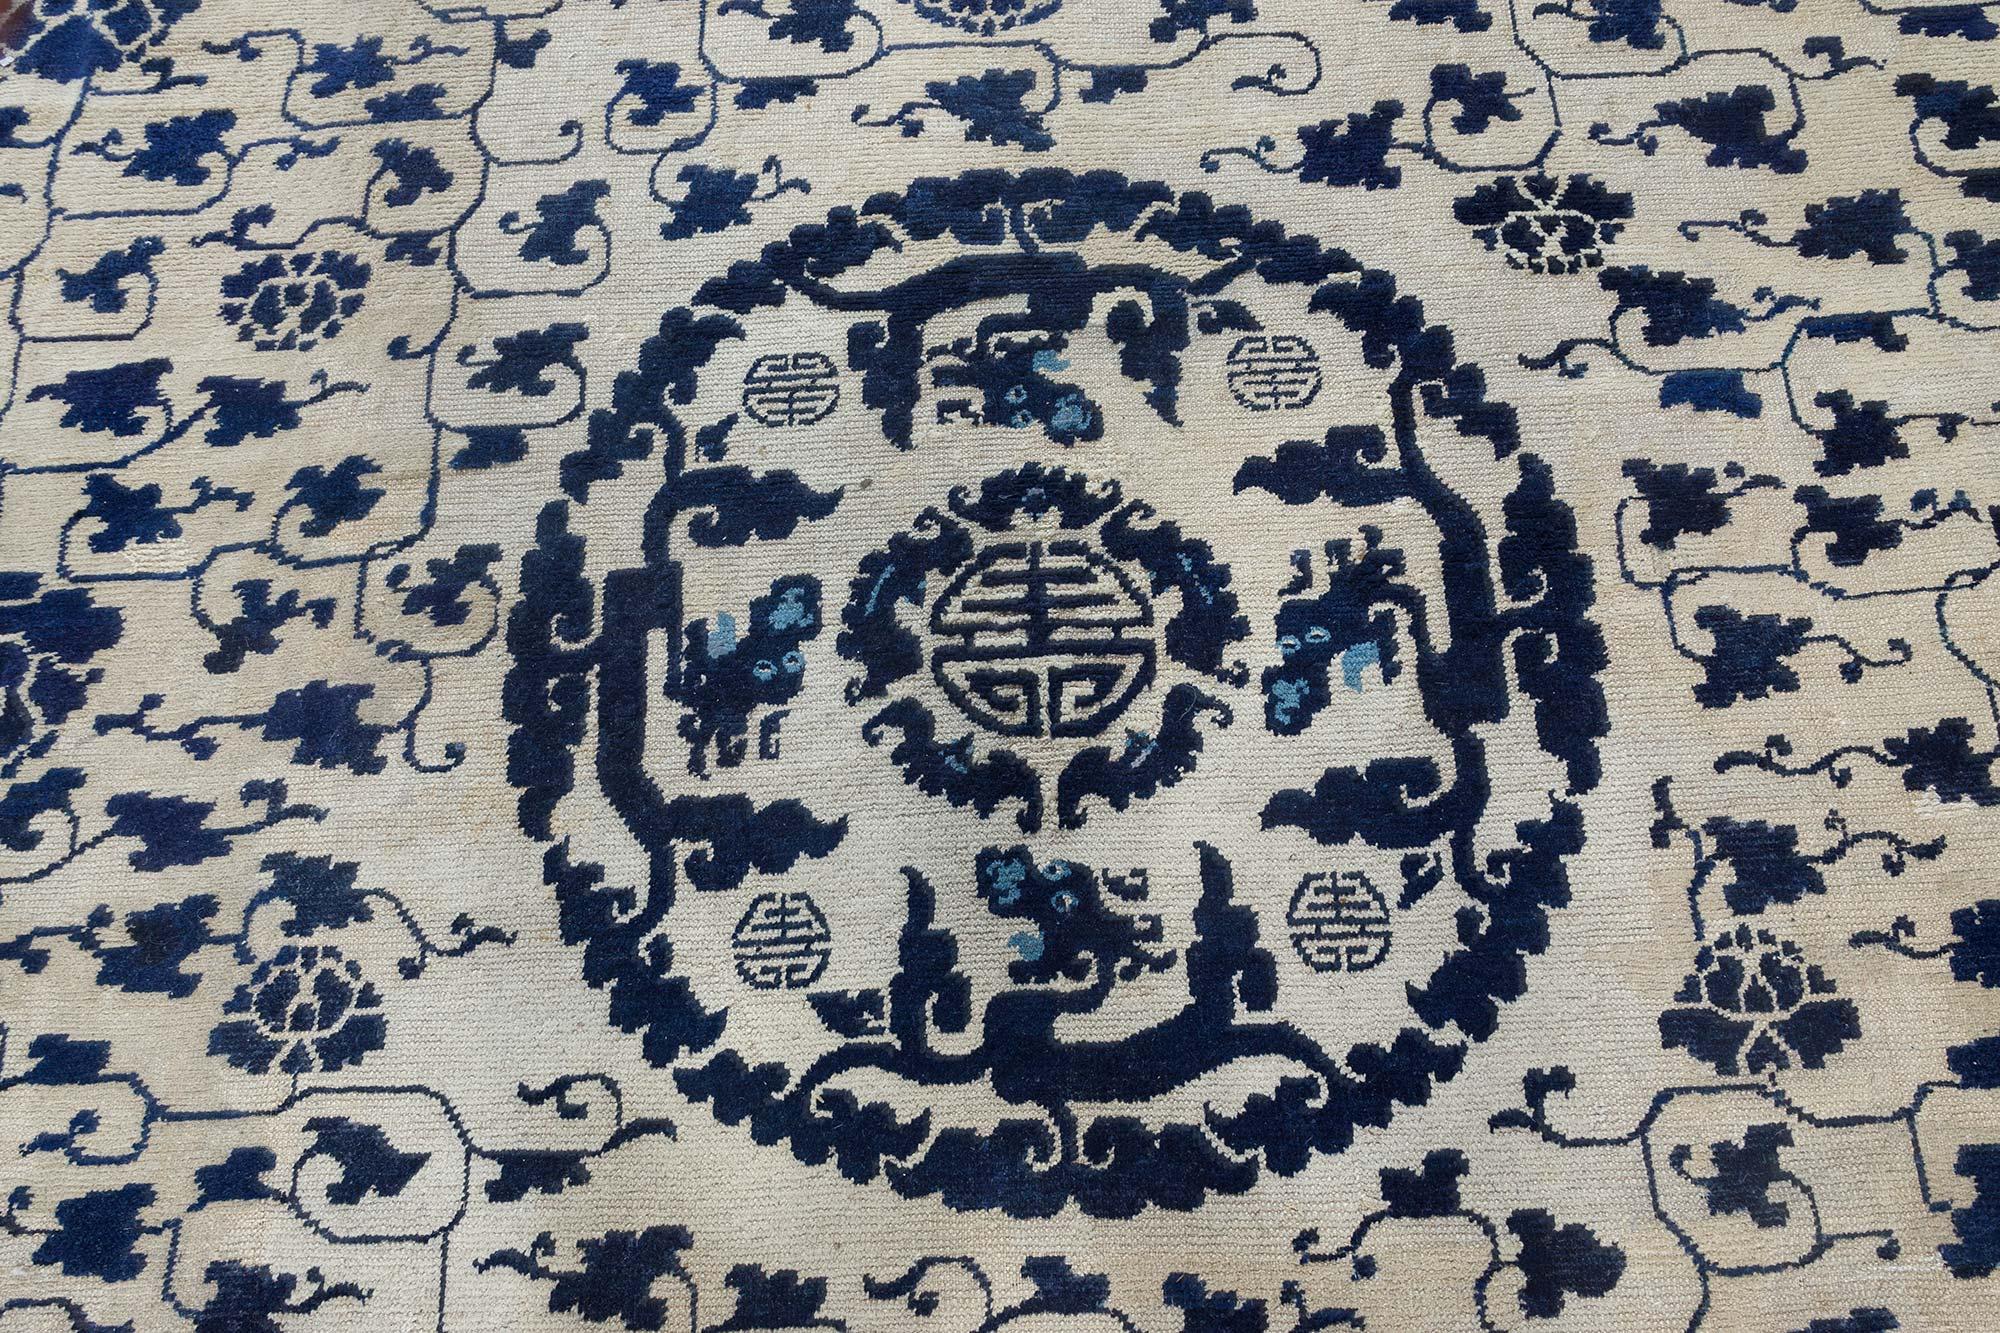 19th century Chinese indigo blue, ivory handmade wool rug
Size: 11'0